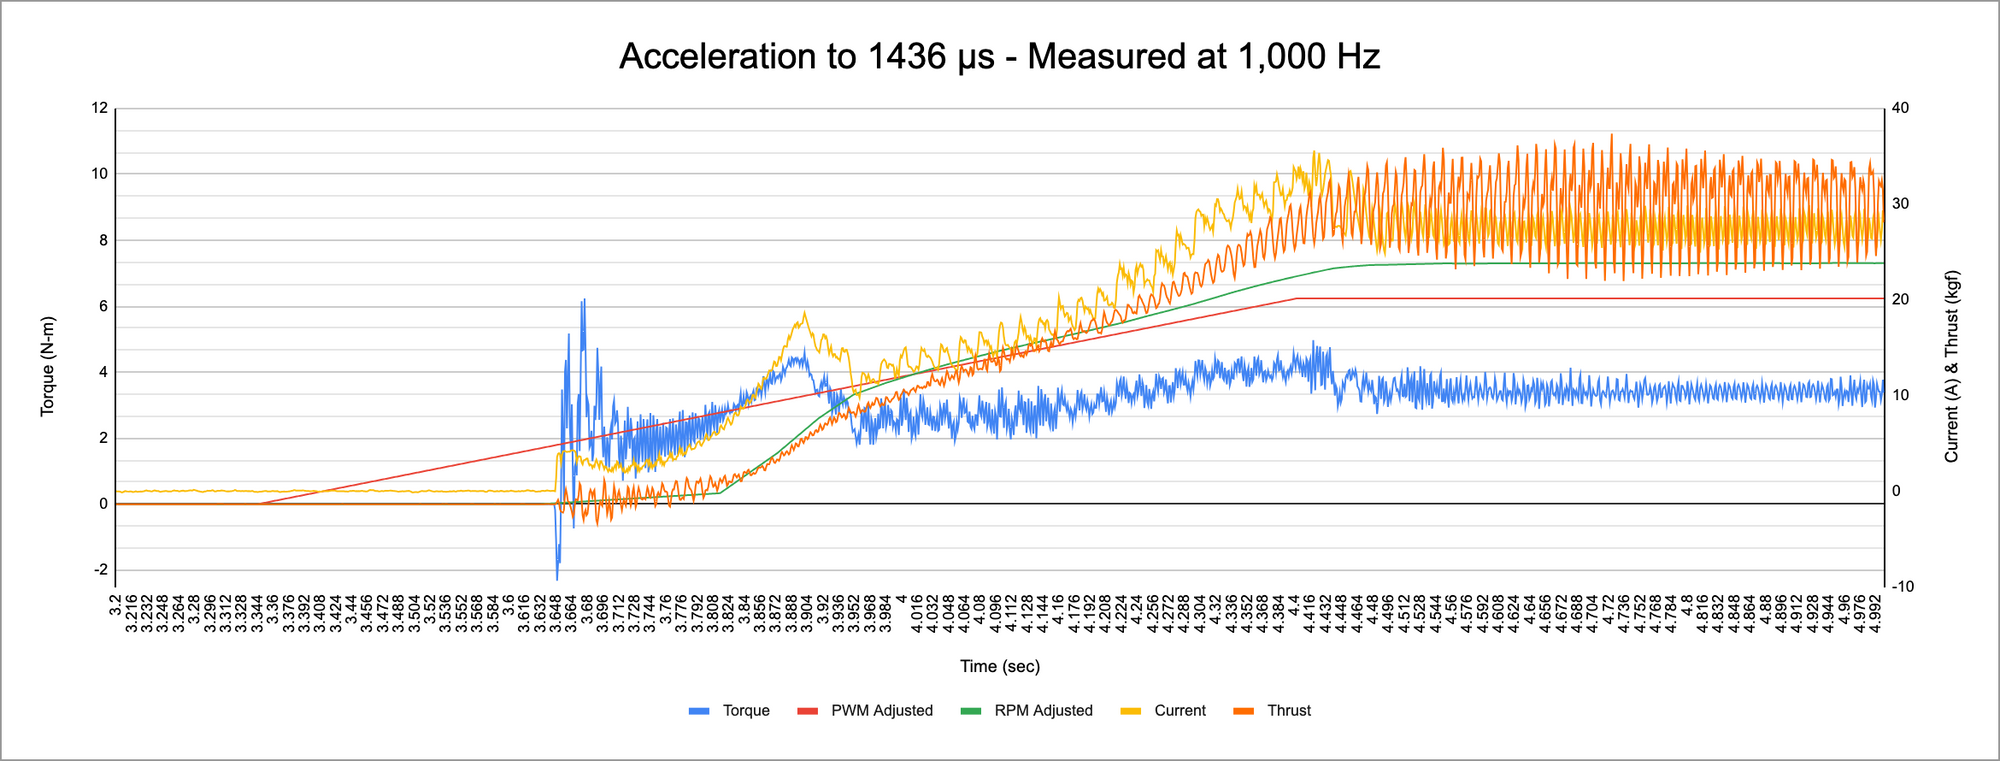 motor performance data at 1000 hz